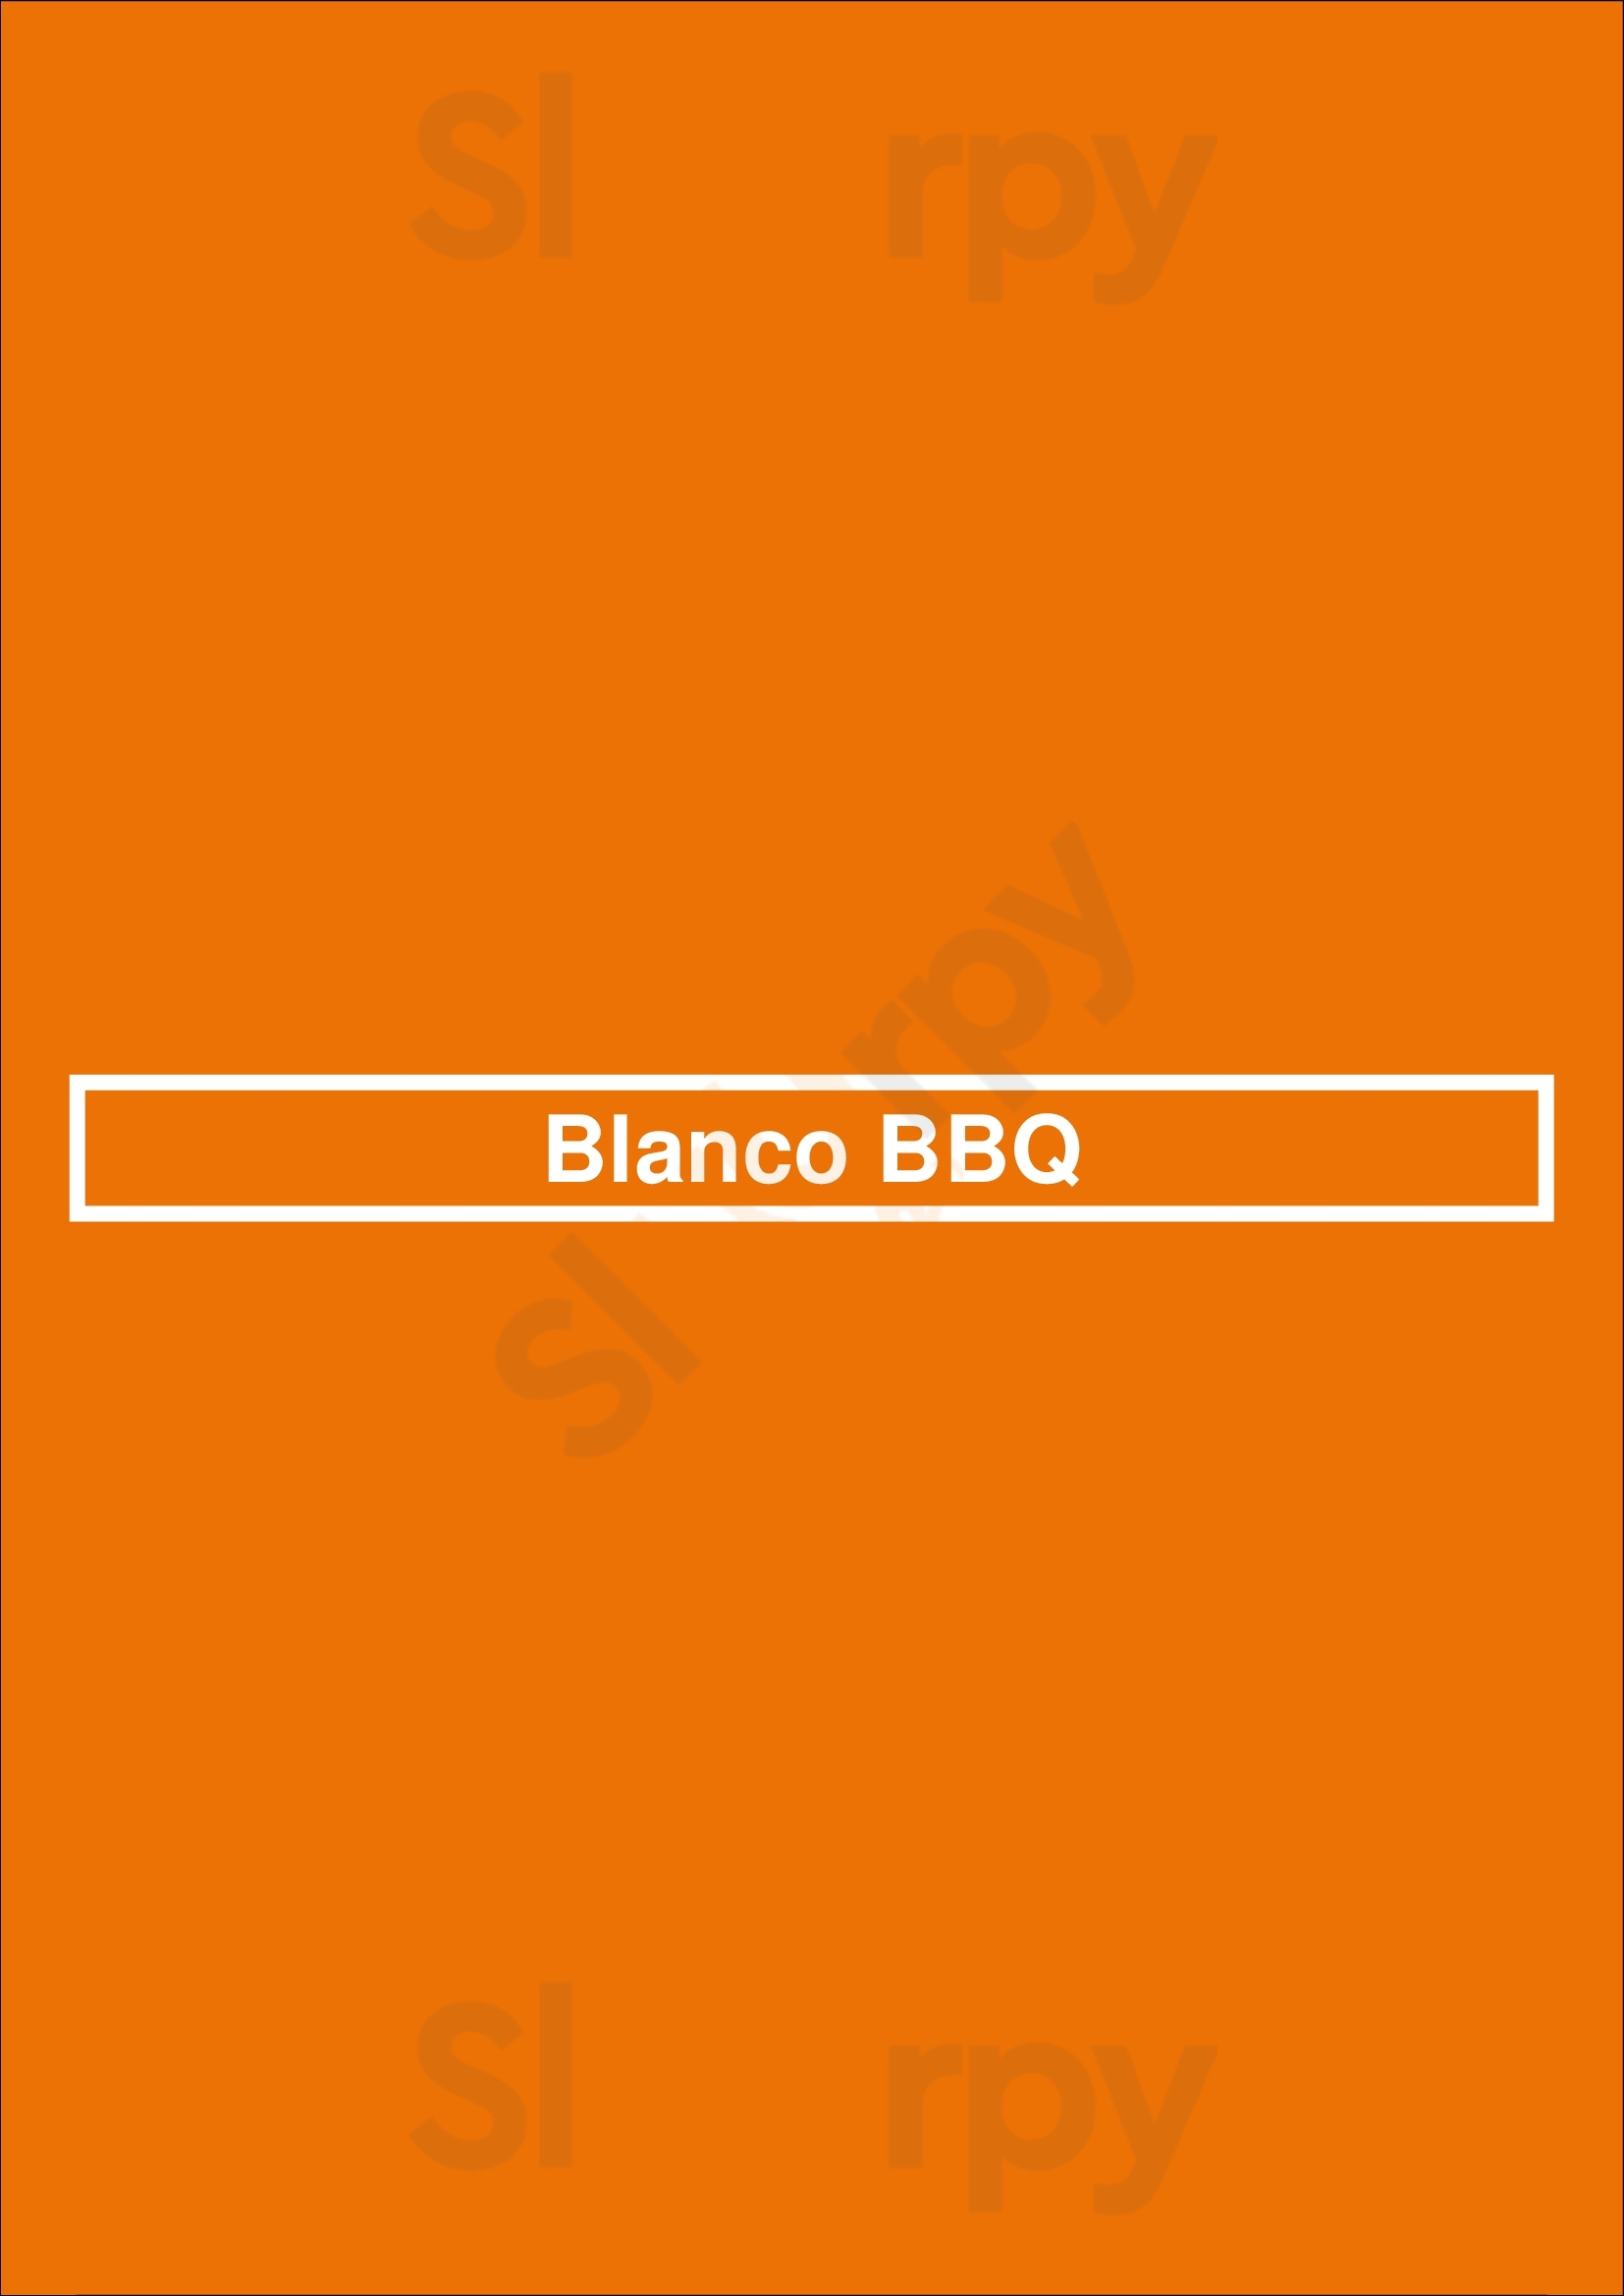 Blanco Bbq San Antonio Menu - 1